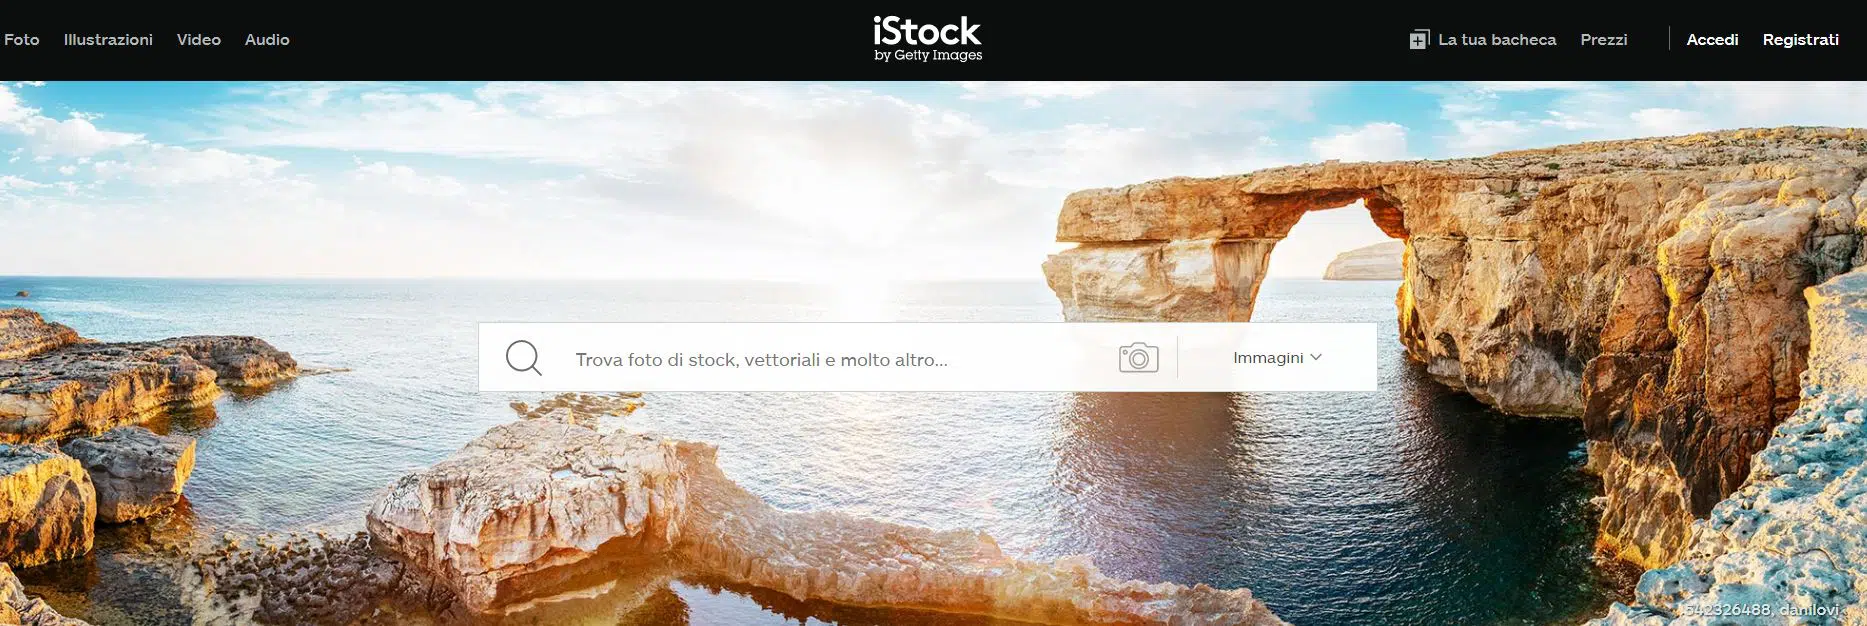 istockphotos best stock photo websites